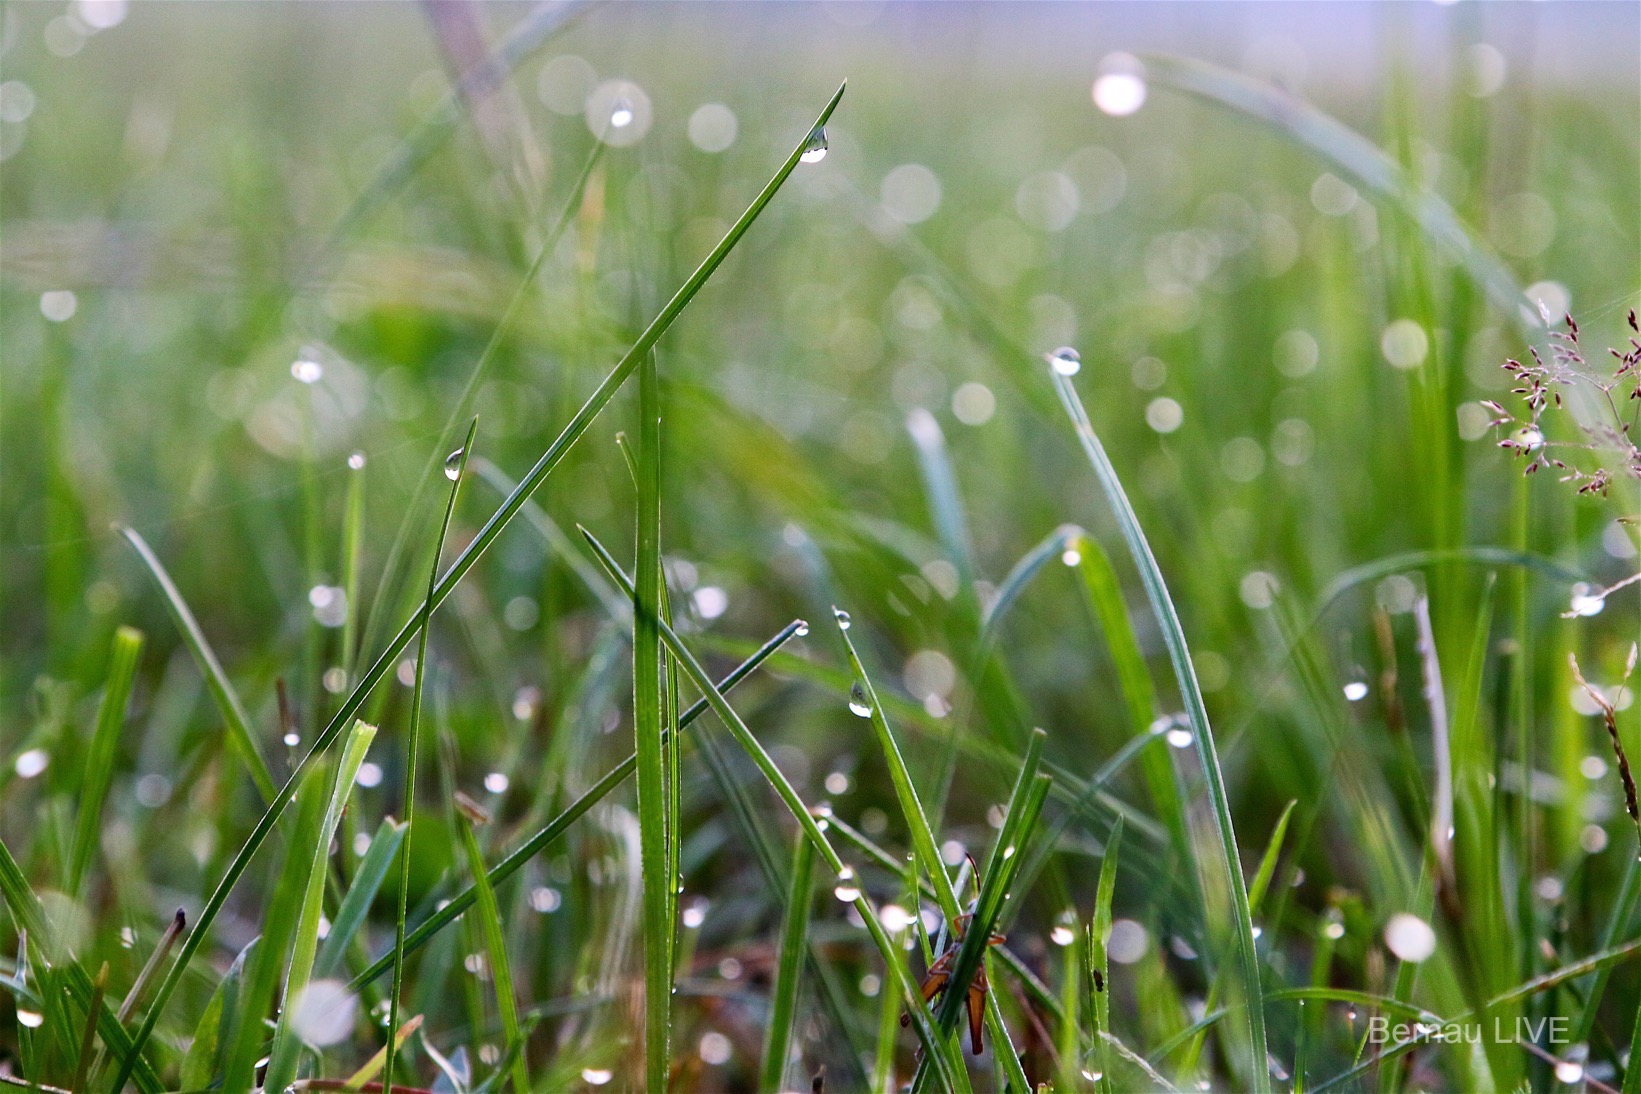 Guten Morgen, Bernau - Regen, Gras